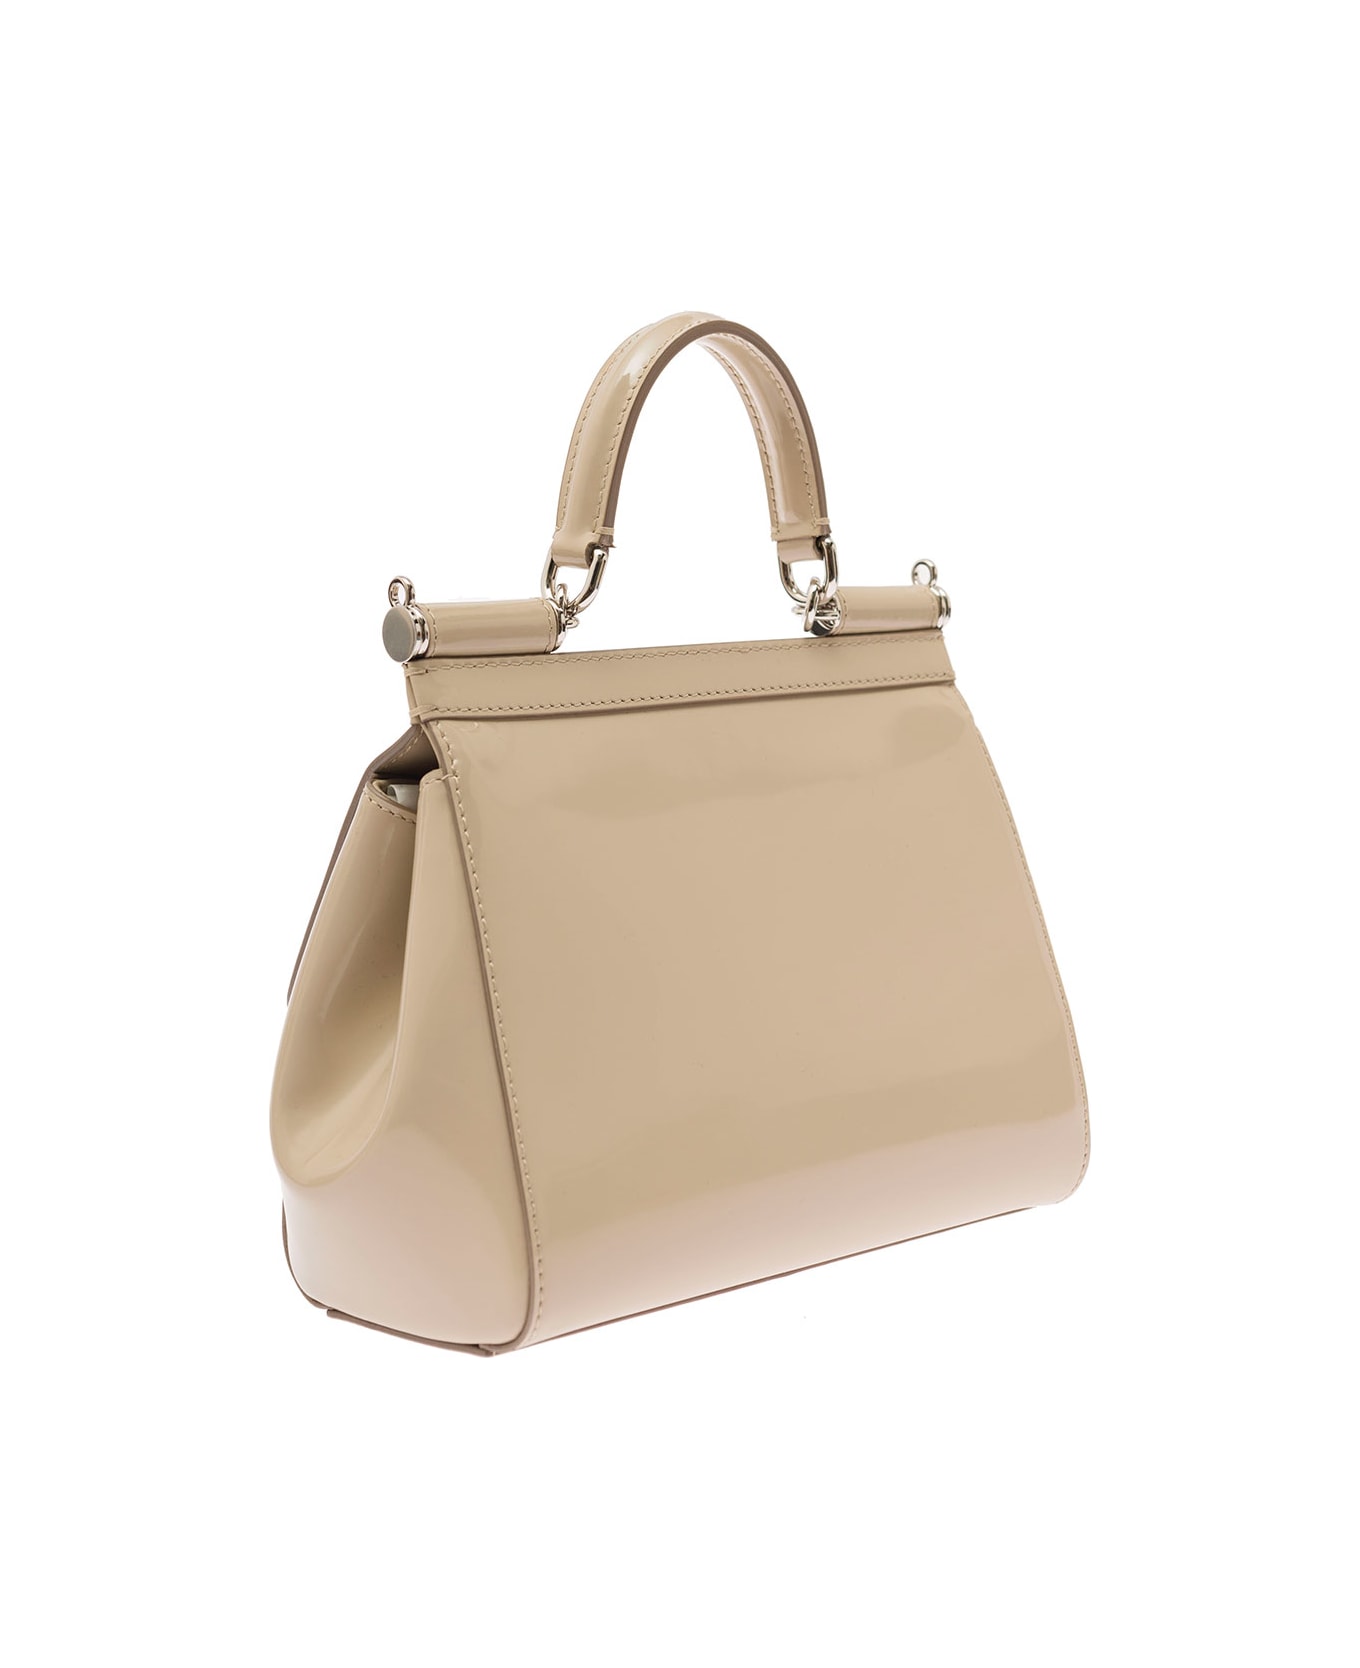 Dolce & Gabbana Beige Sicily Medium Handbag In Shiny Leather Woman - Beige トートバッグ